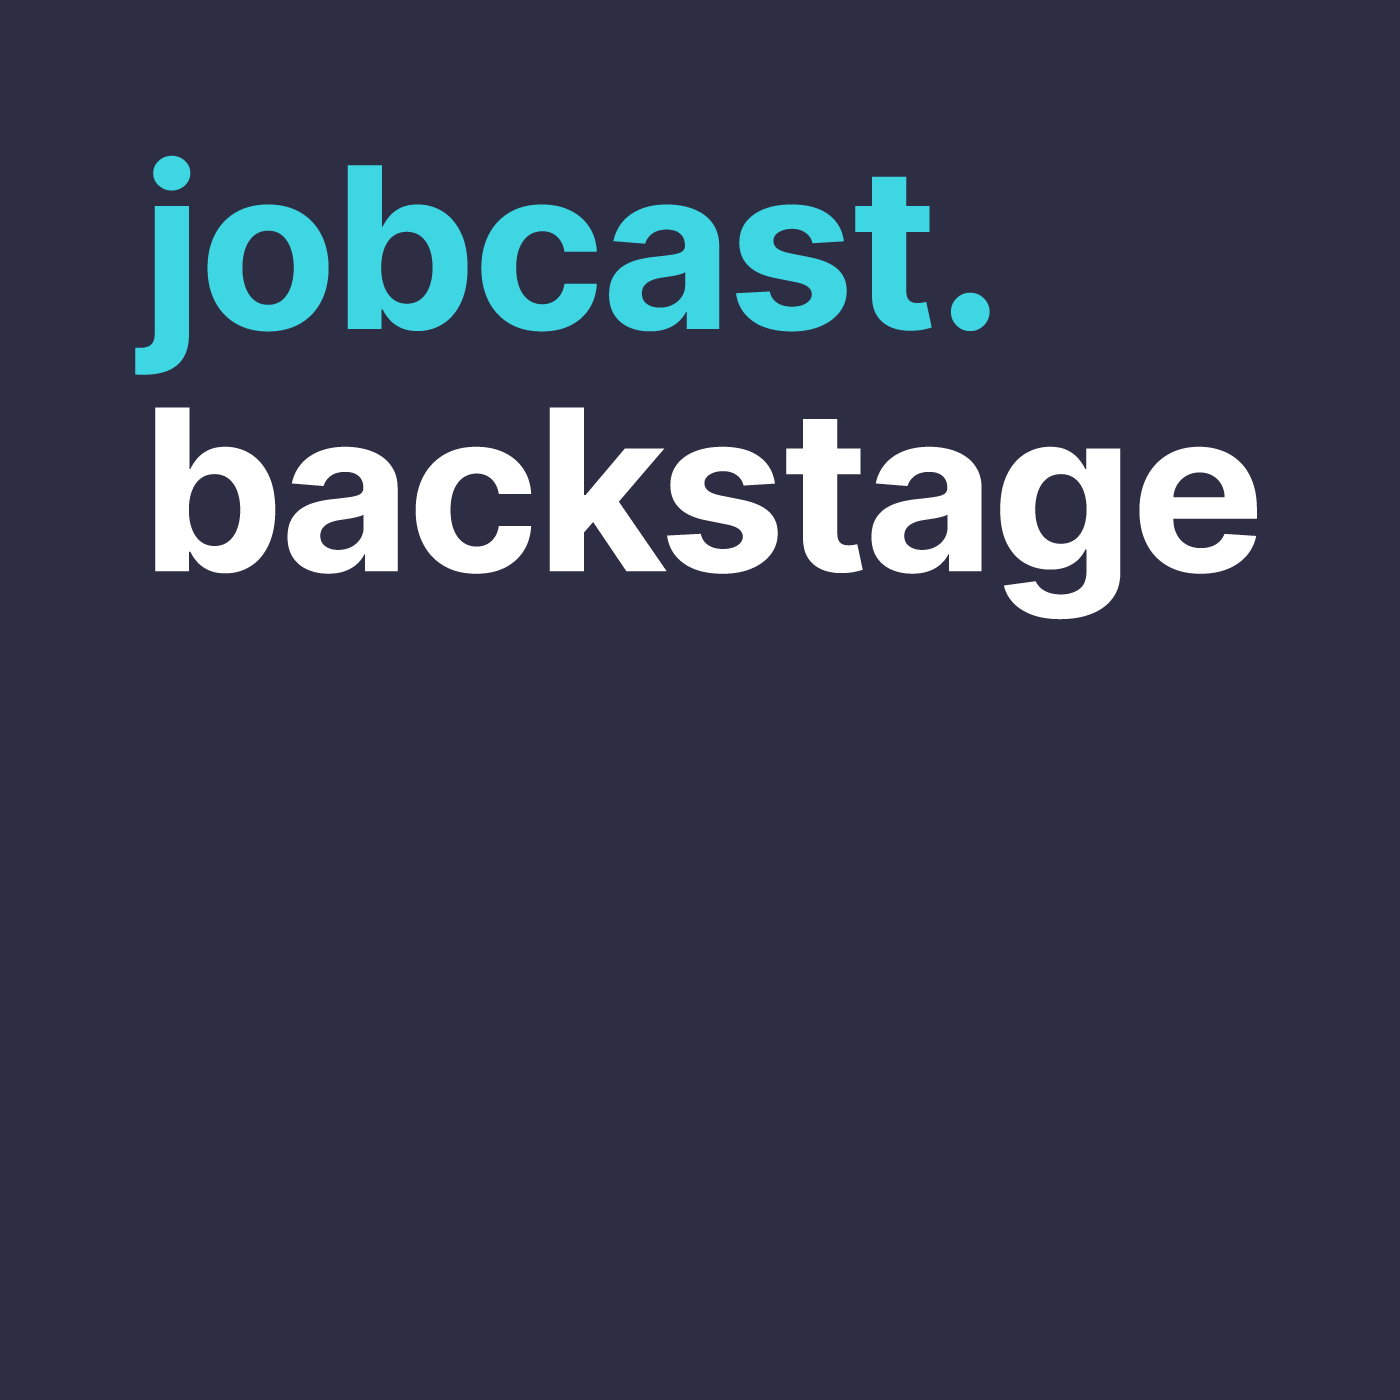 Jobcast. Backstage. Dein neuer Job.